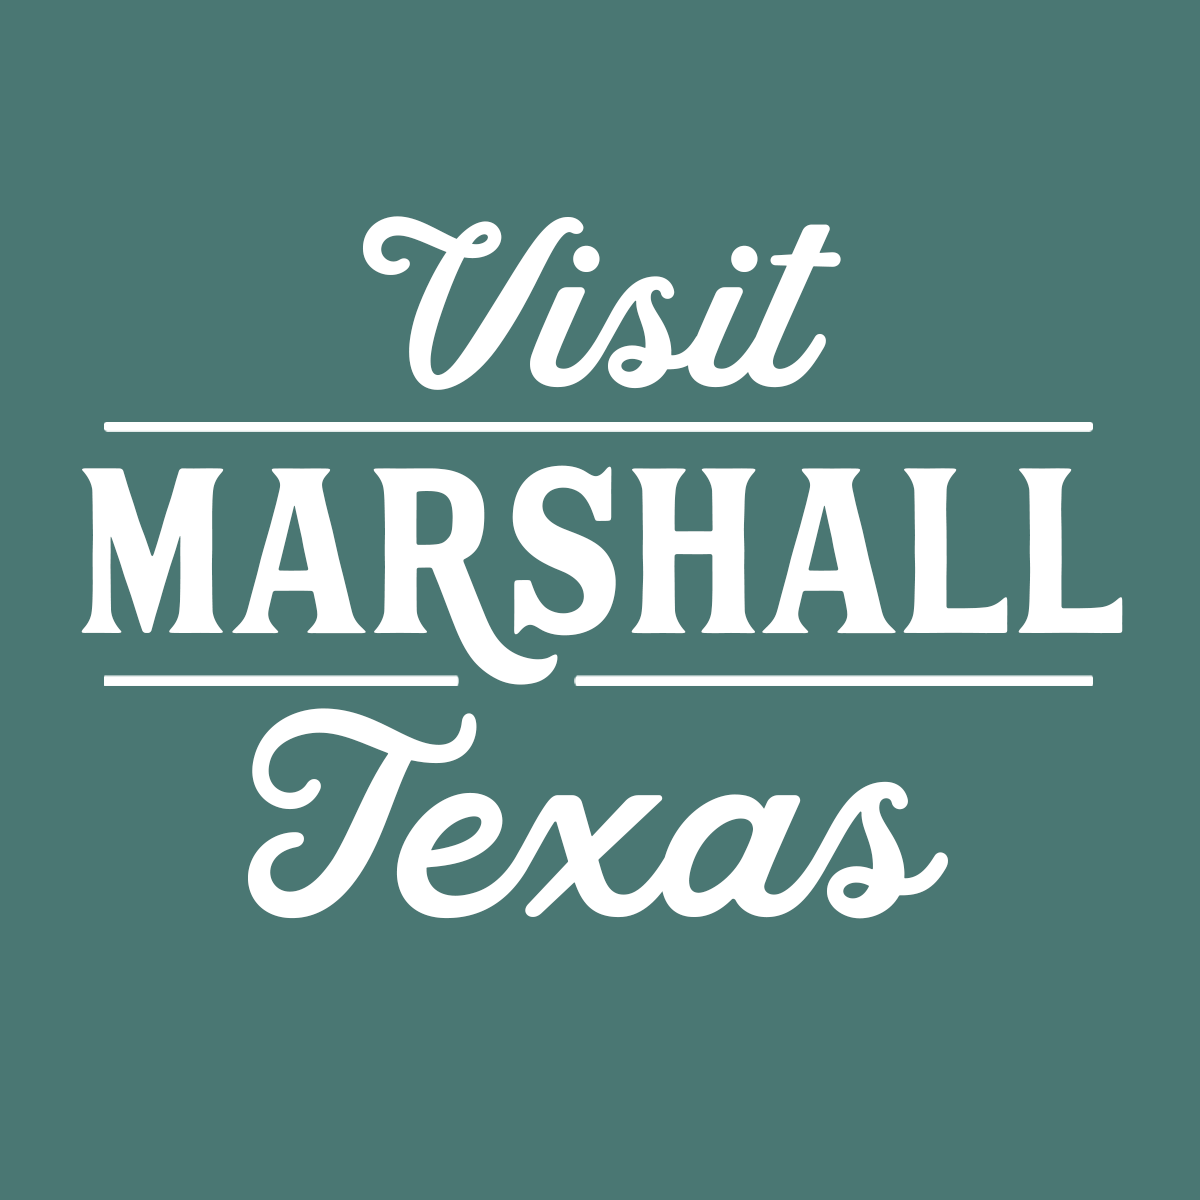 Visit Marshall Texas